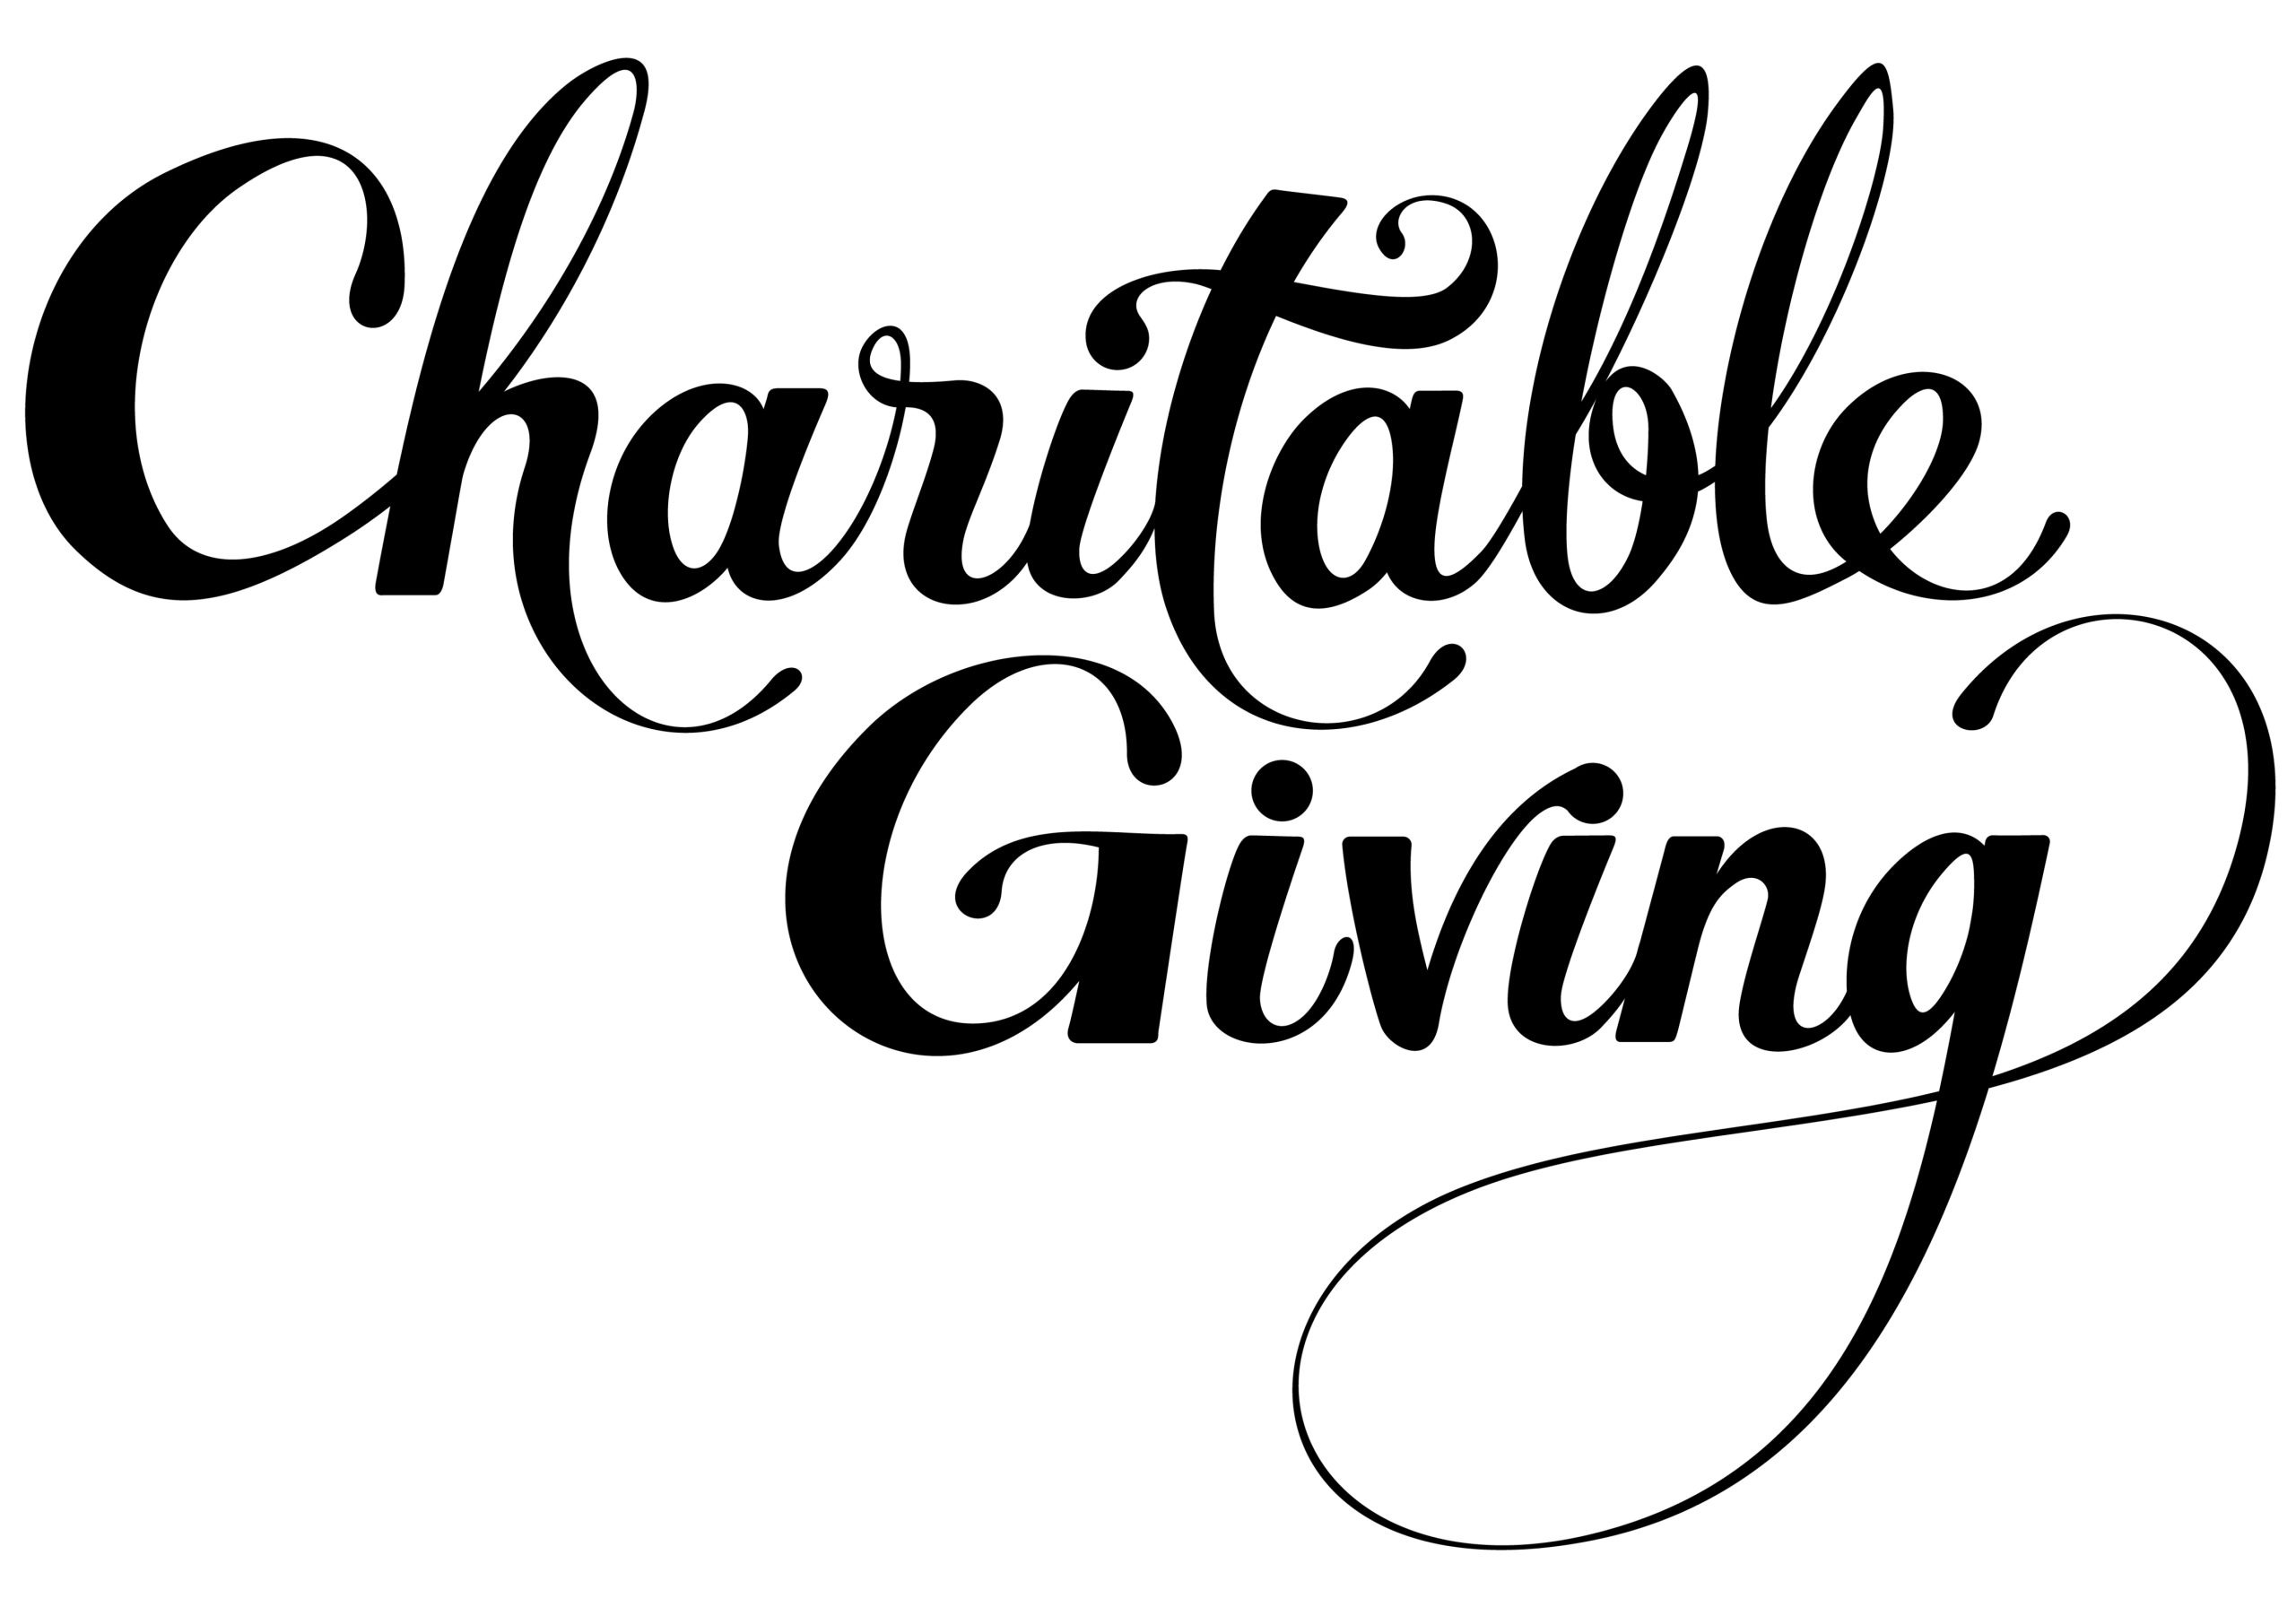 Charitable Giving - custom calligraphy text